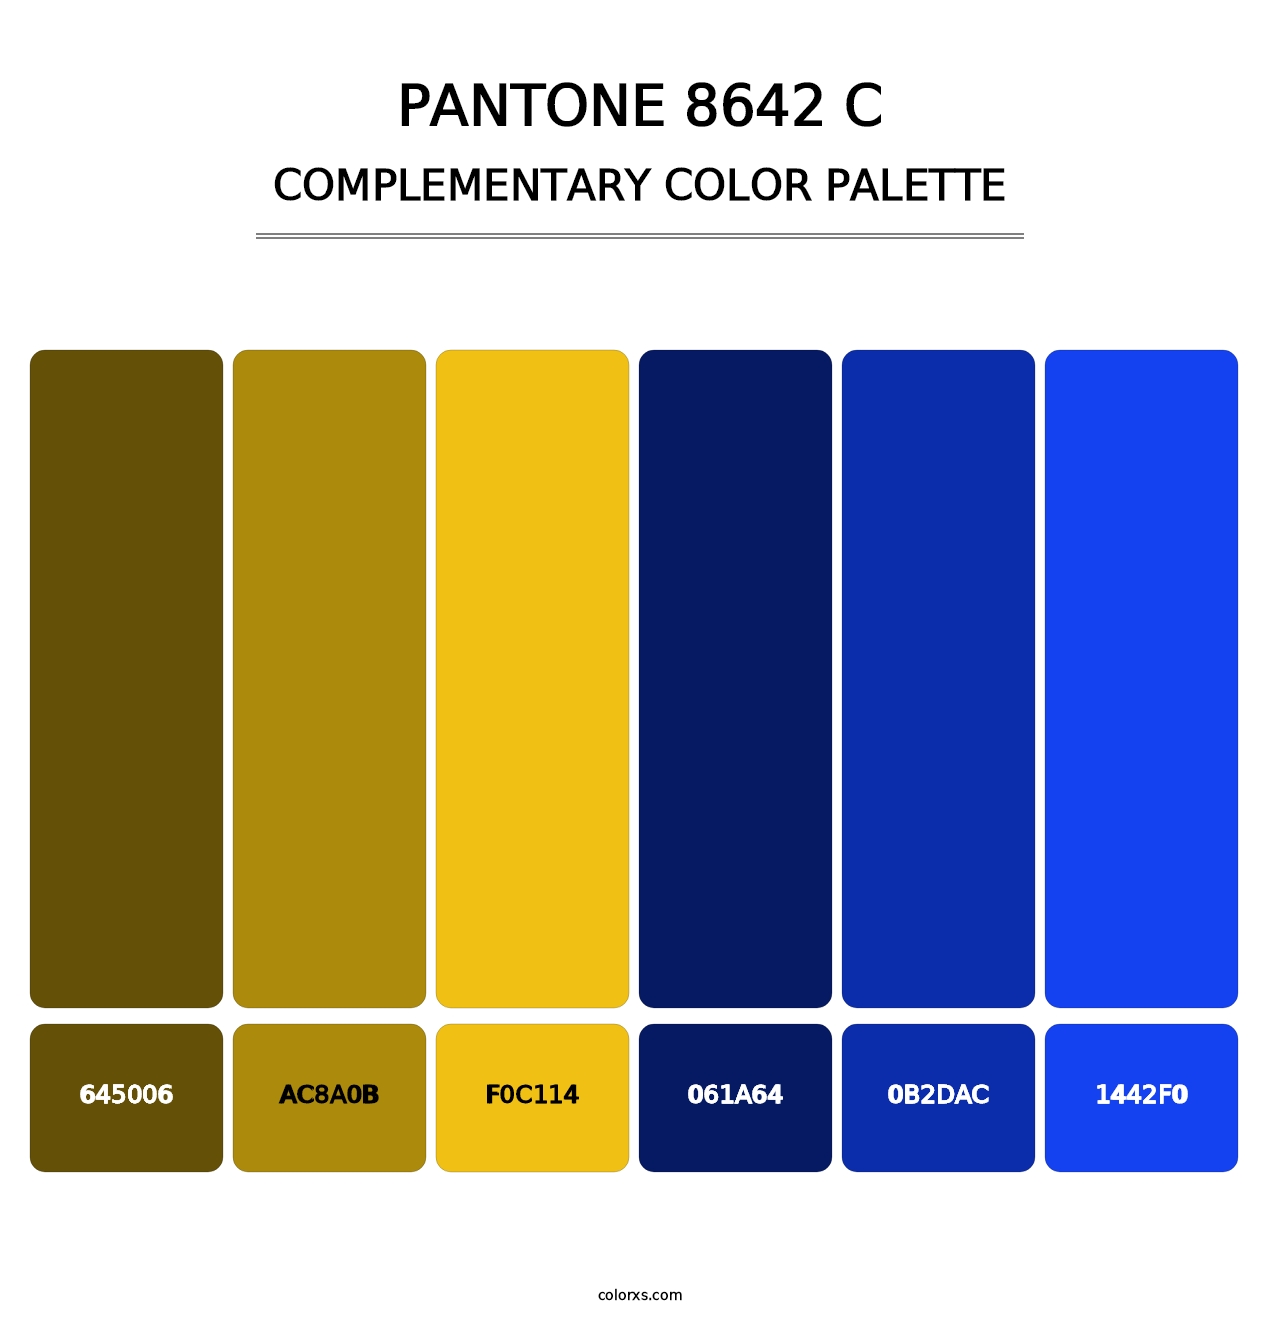 PANTONE 8642 C - Complementary Color Palette